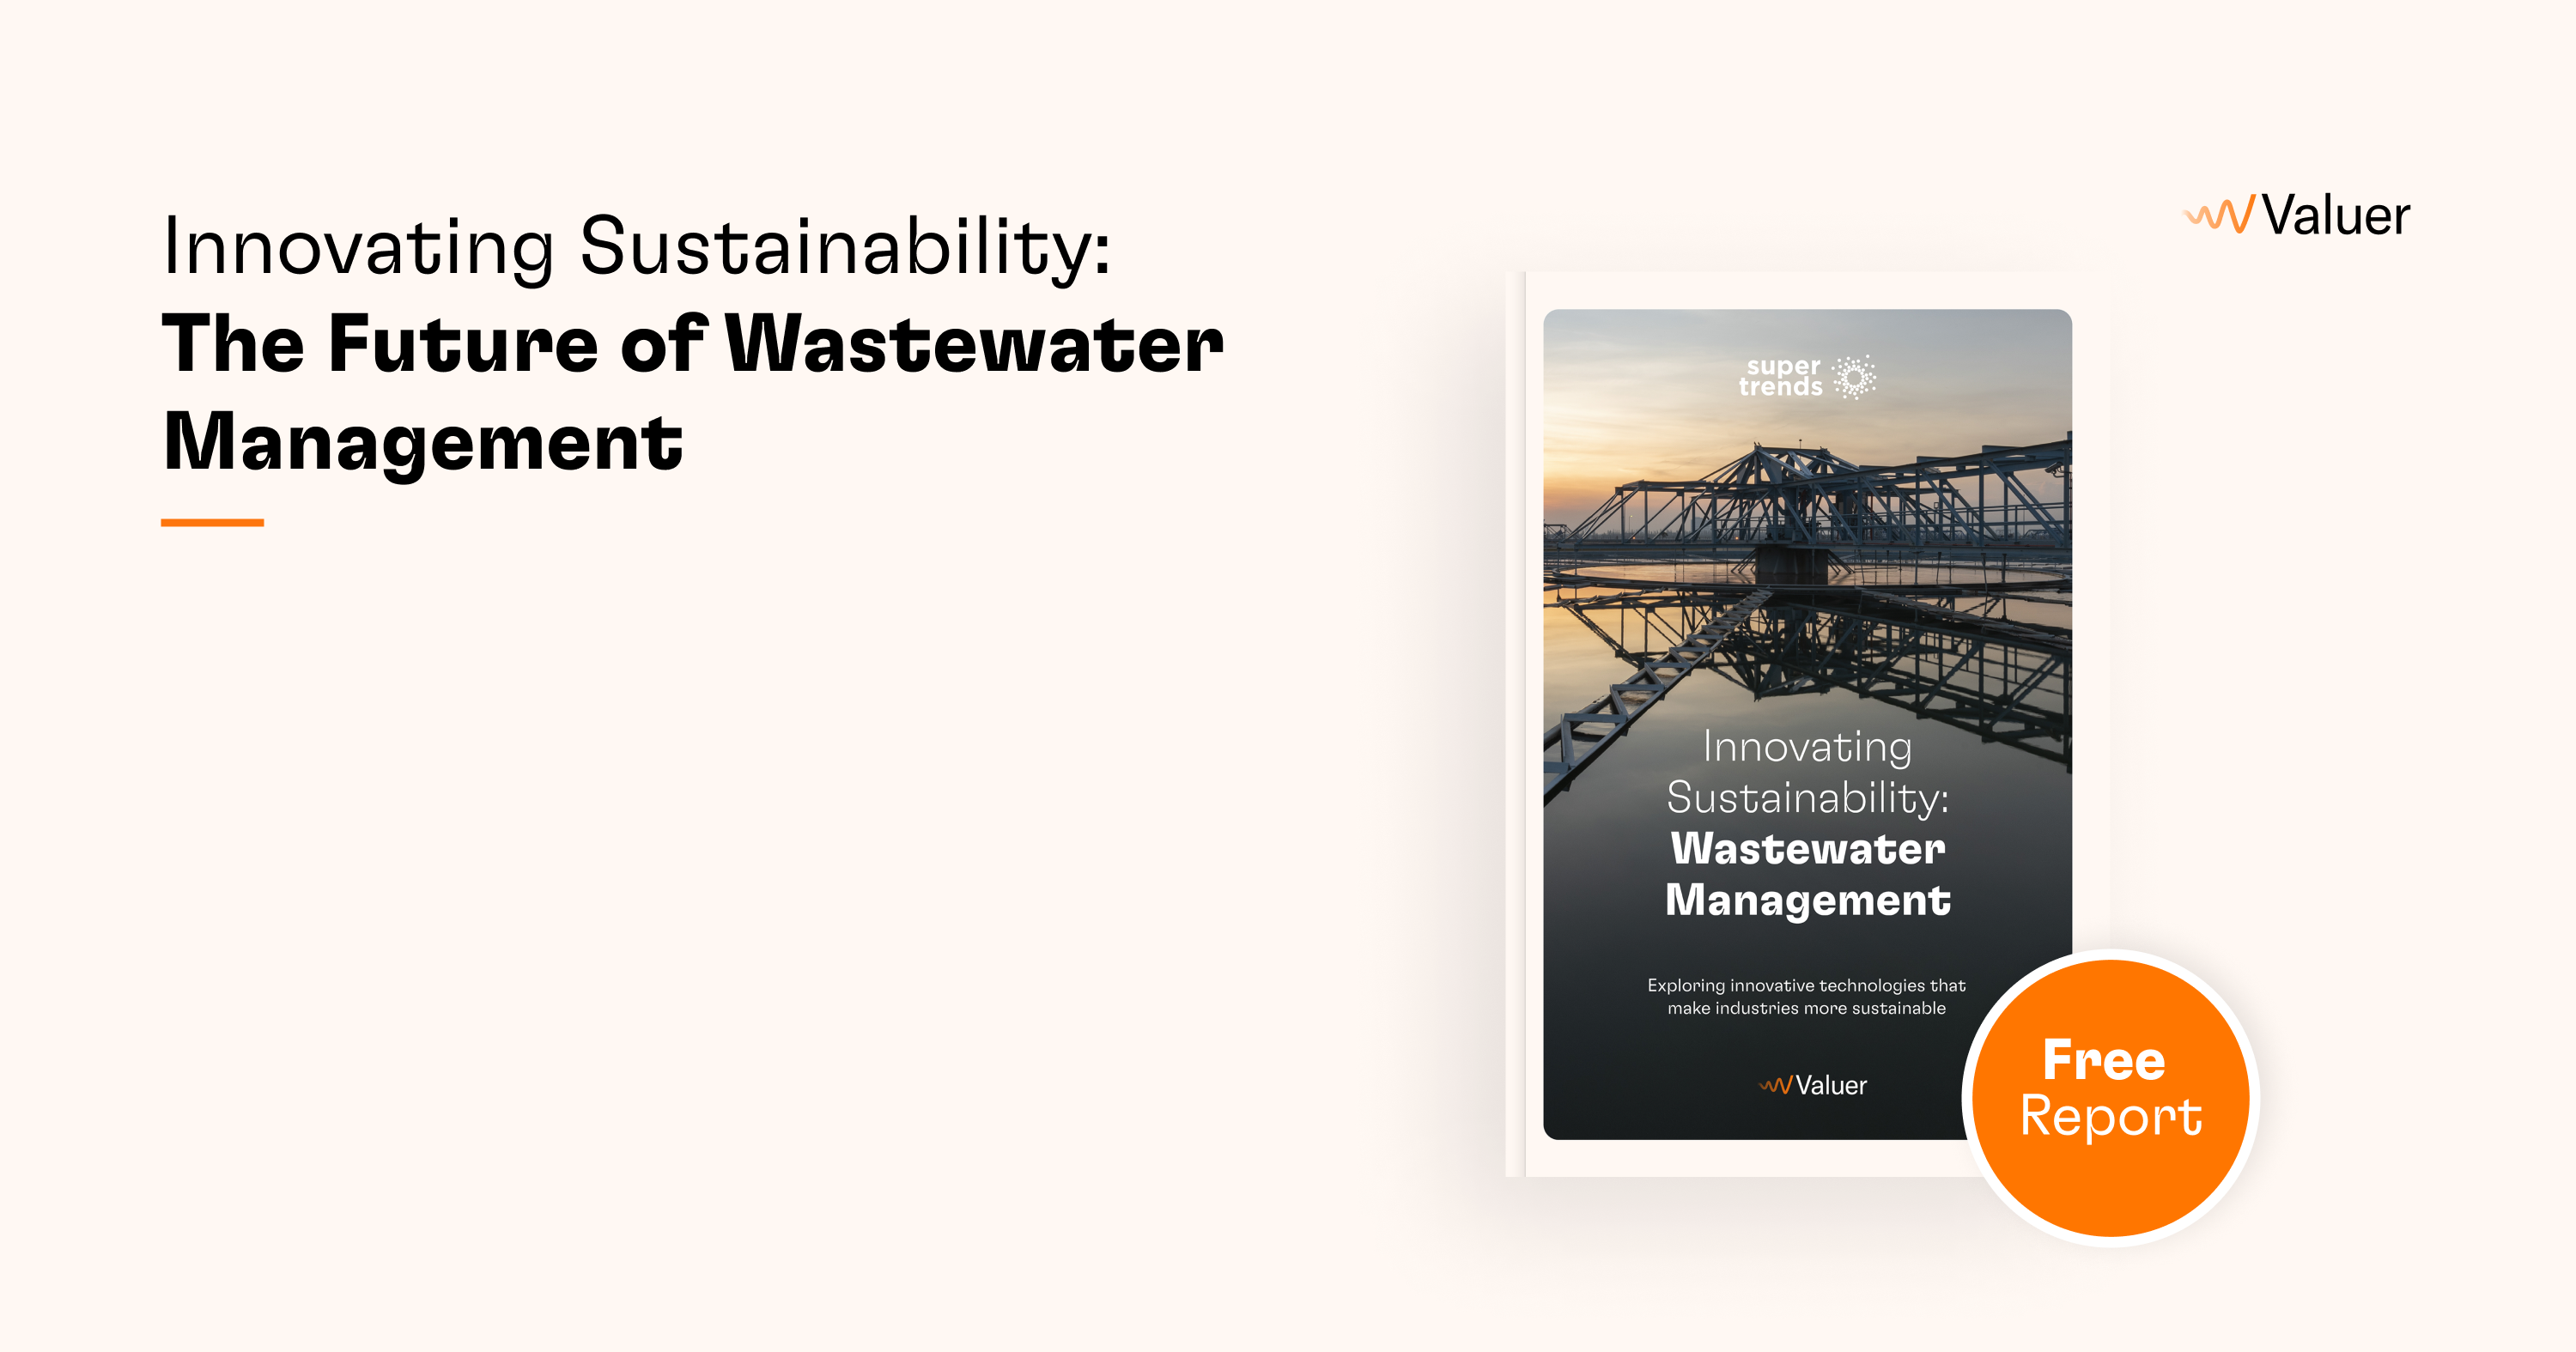 Innovating Sustainability Wastewater Management